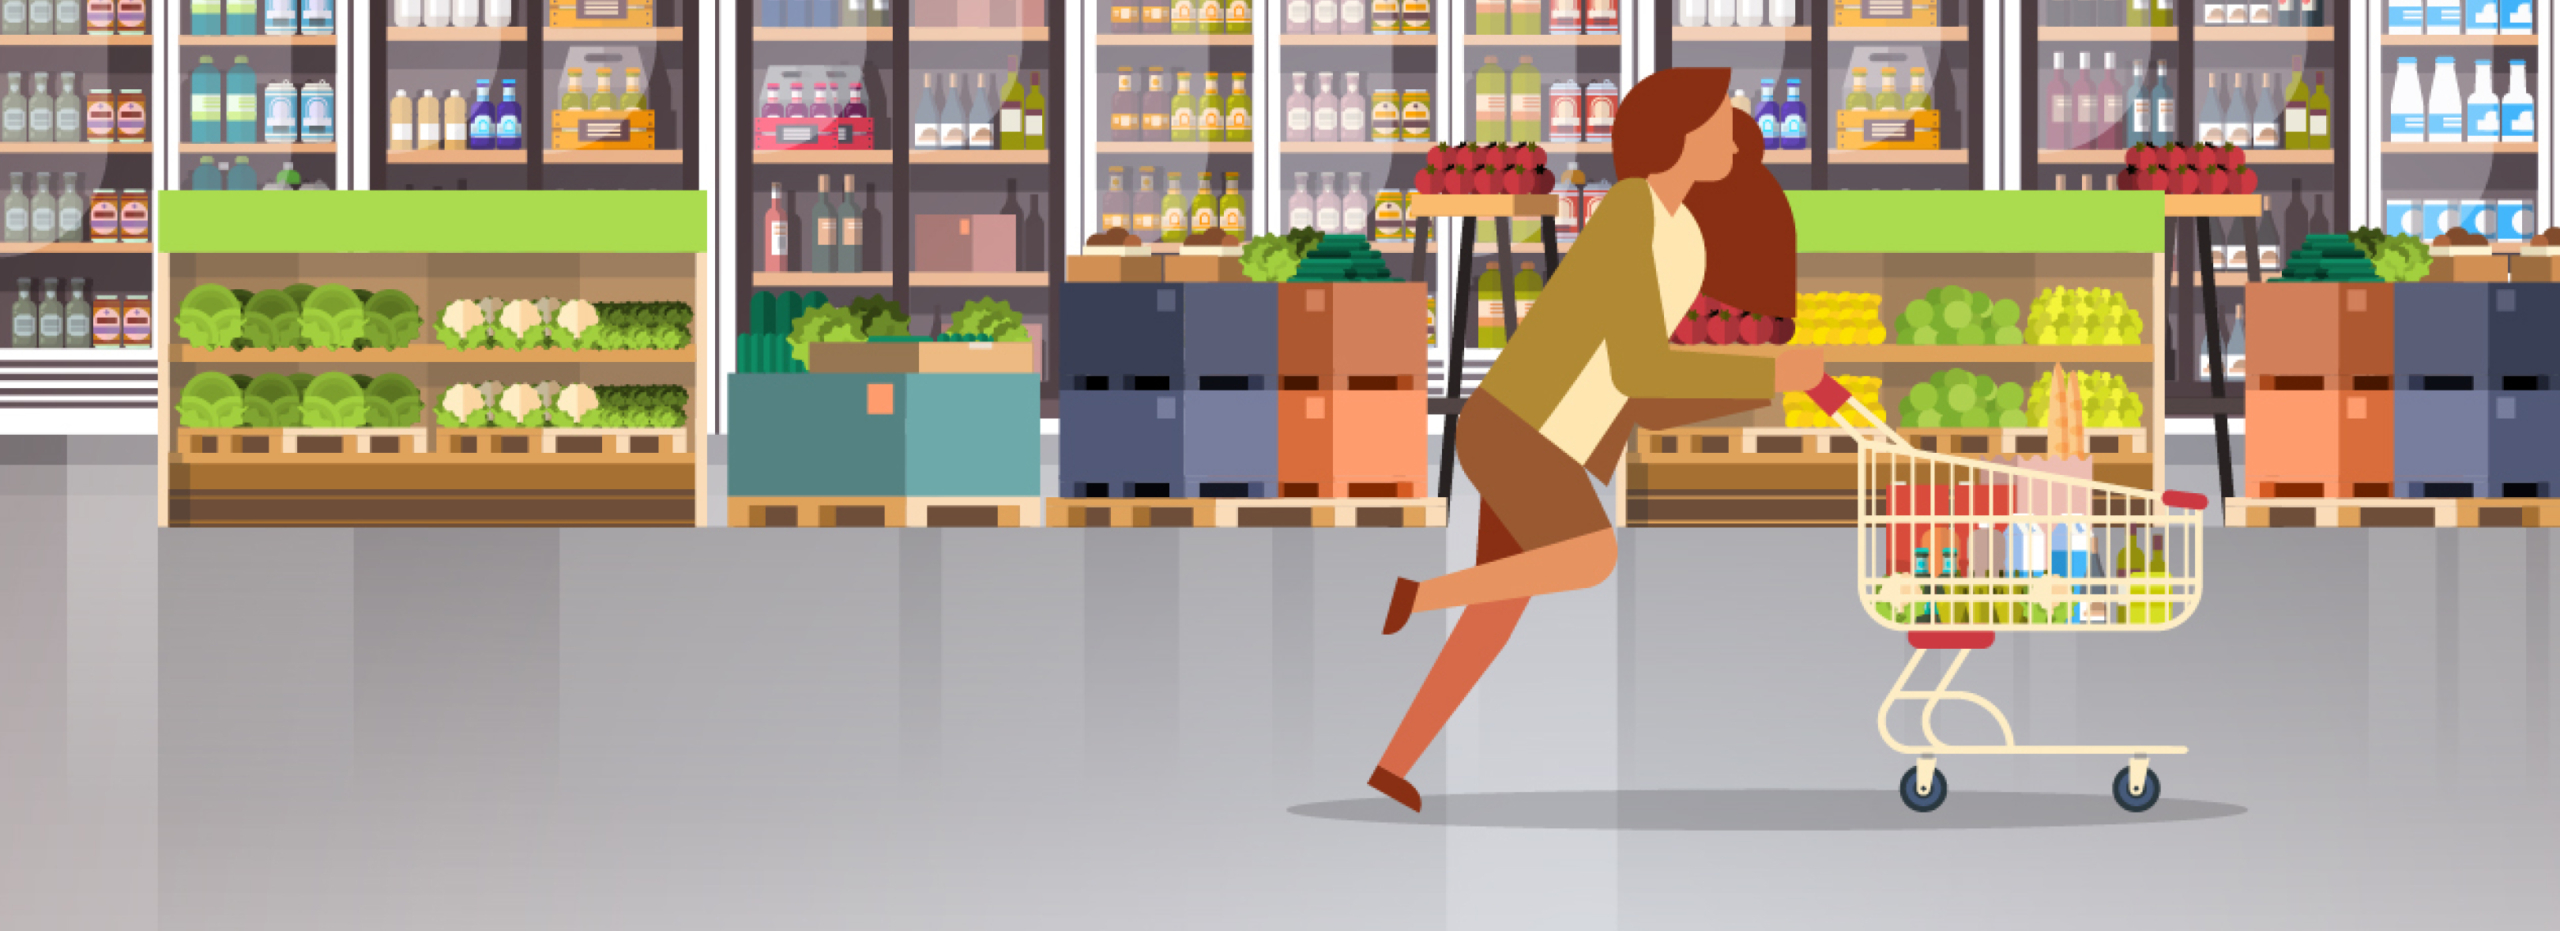 Woman pushing shopping cart through grocery store